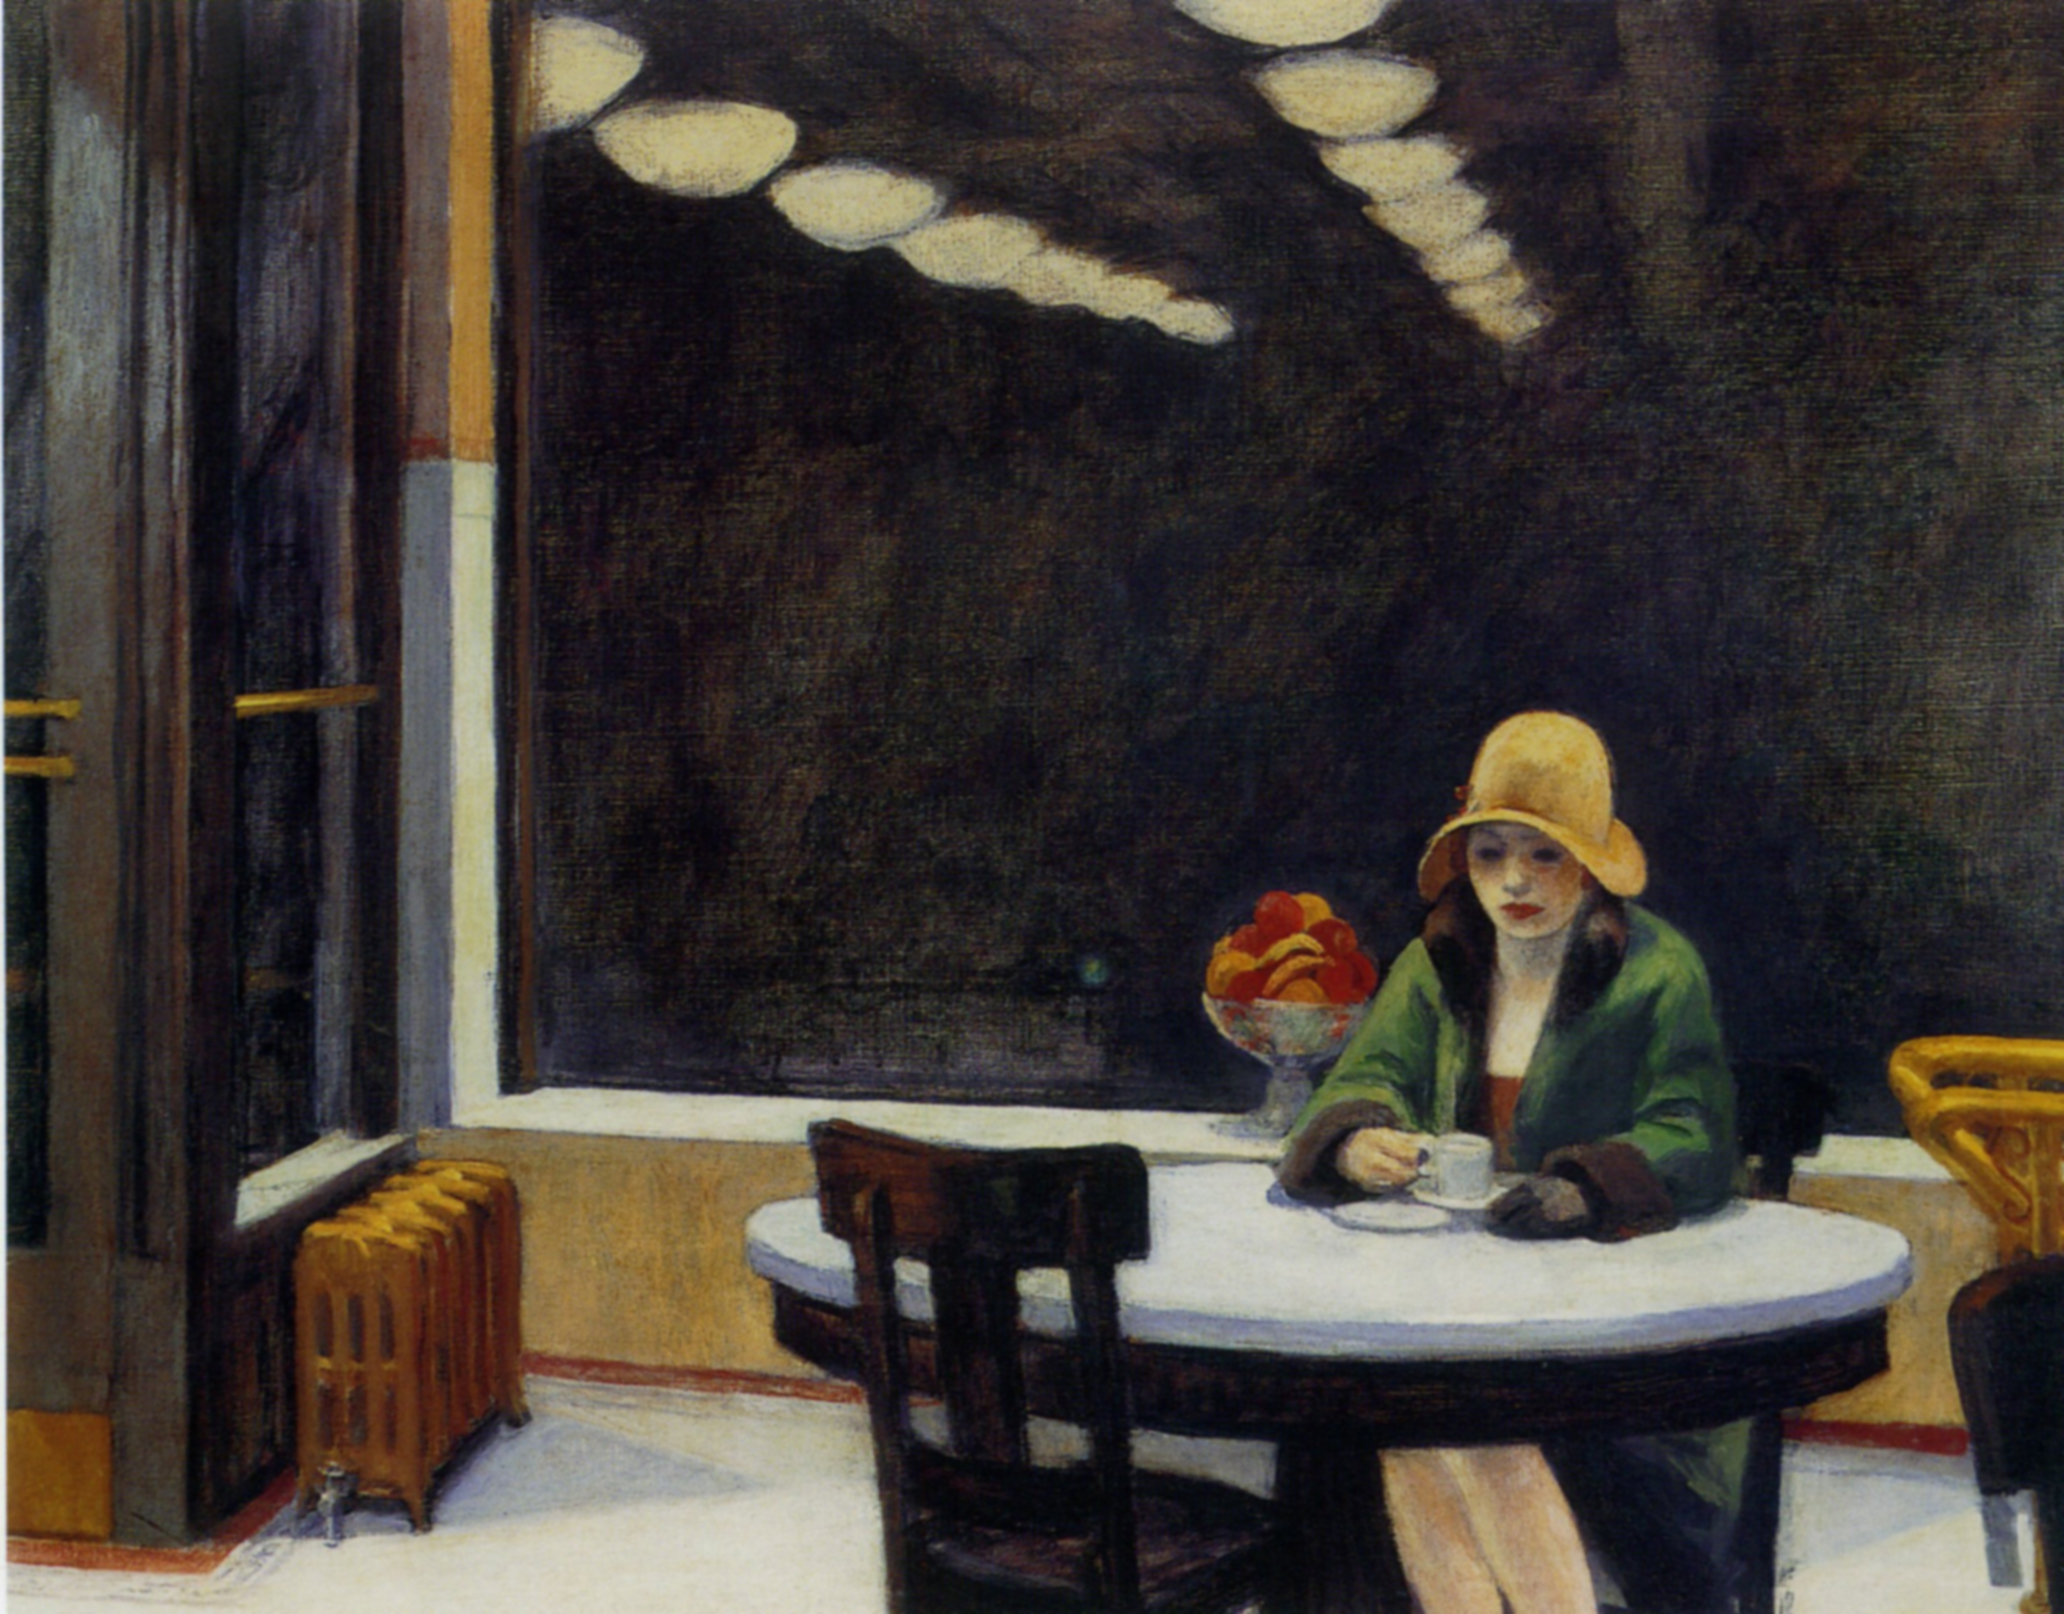 Automat by Edward Hopper - 1927 - 71.4 cm × 91.4 cm 